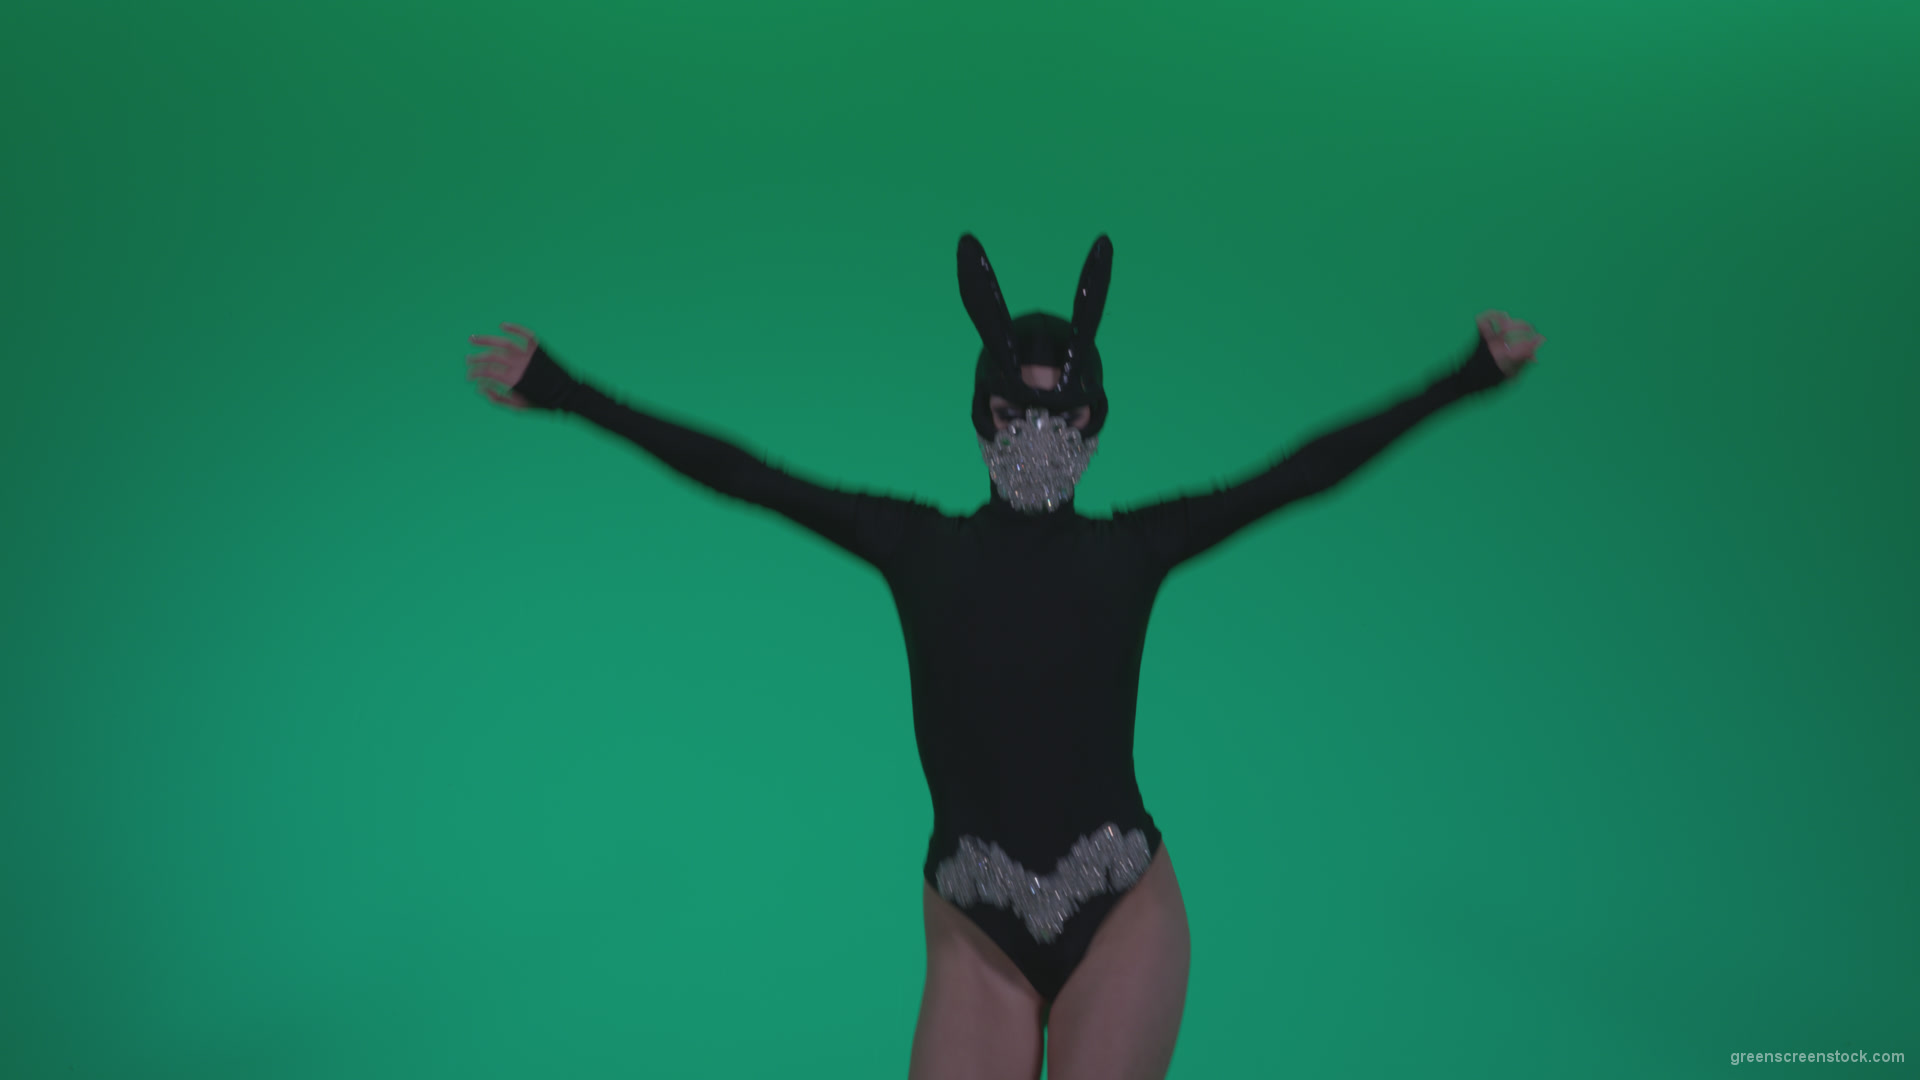 Go-go-Dancer-Black-Rabbit-u12-Green-Screen-Video-Footage_008 Green Screen Stock